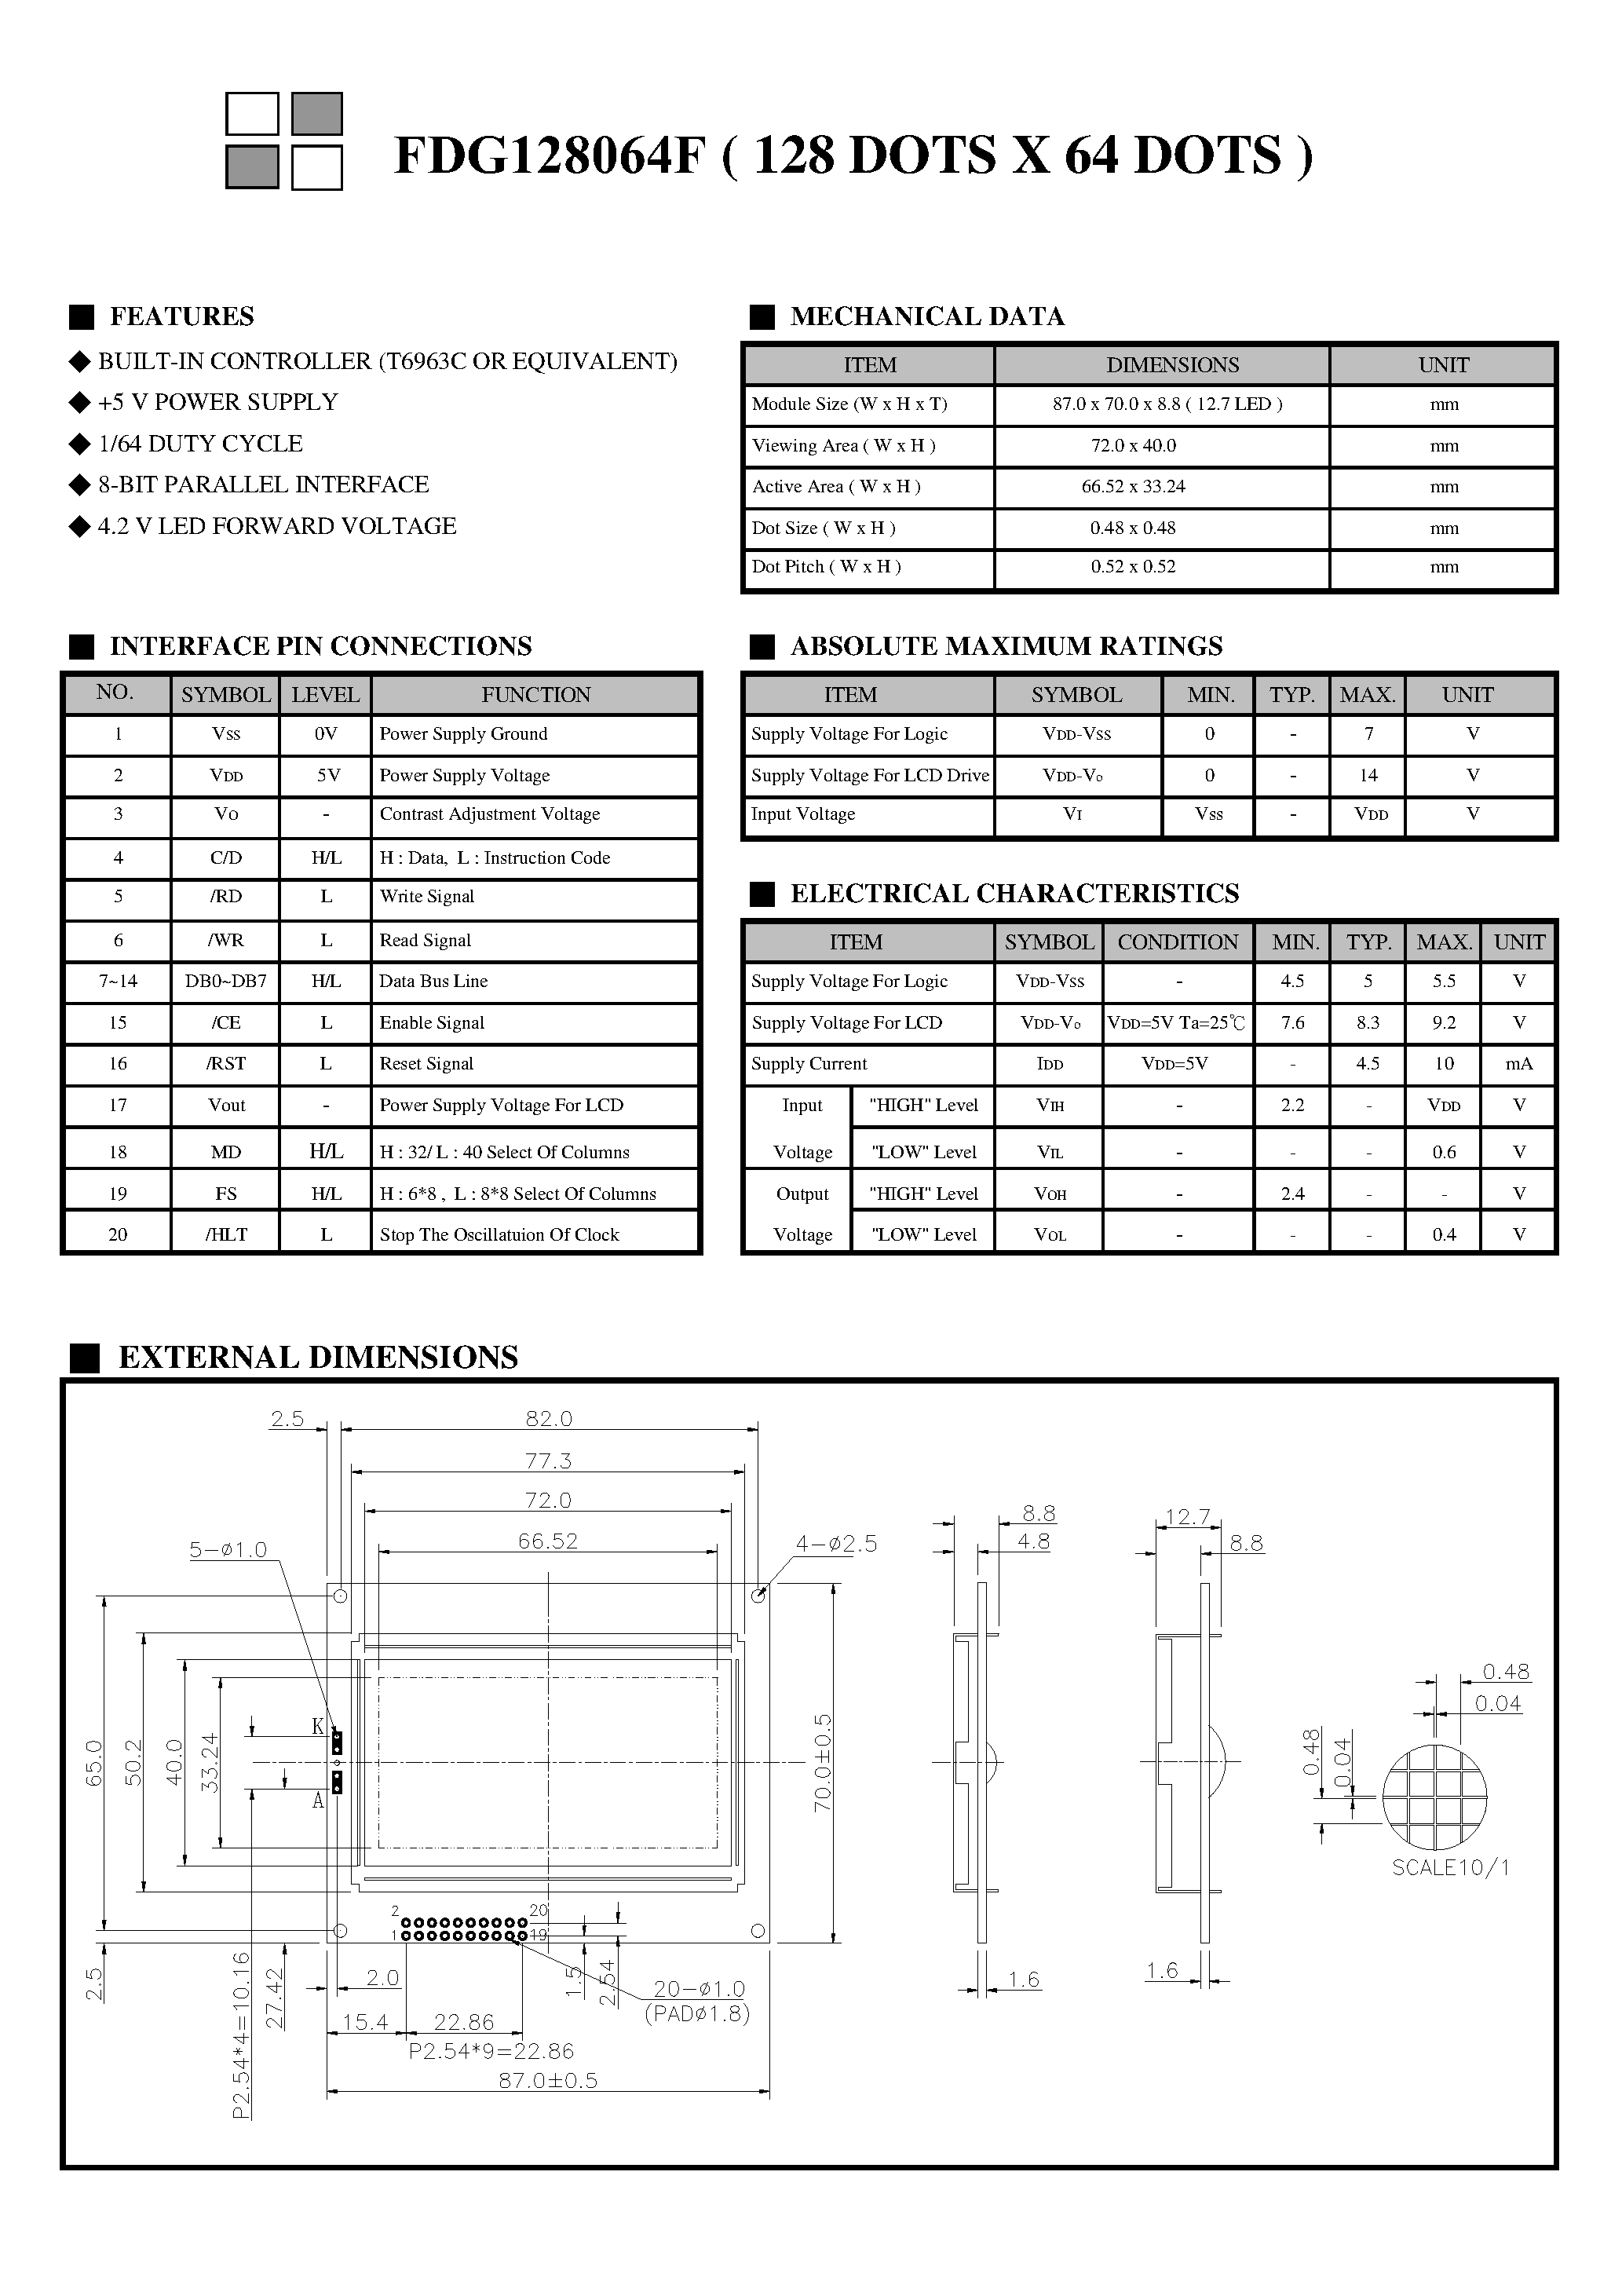 Datasheet FDG128064F - Monochrome Lcd Module page 2